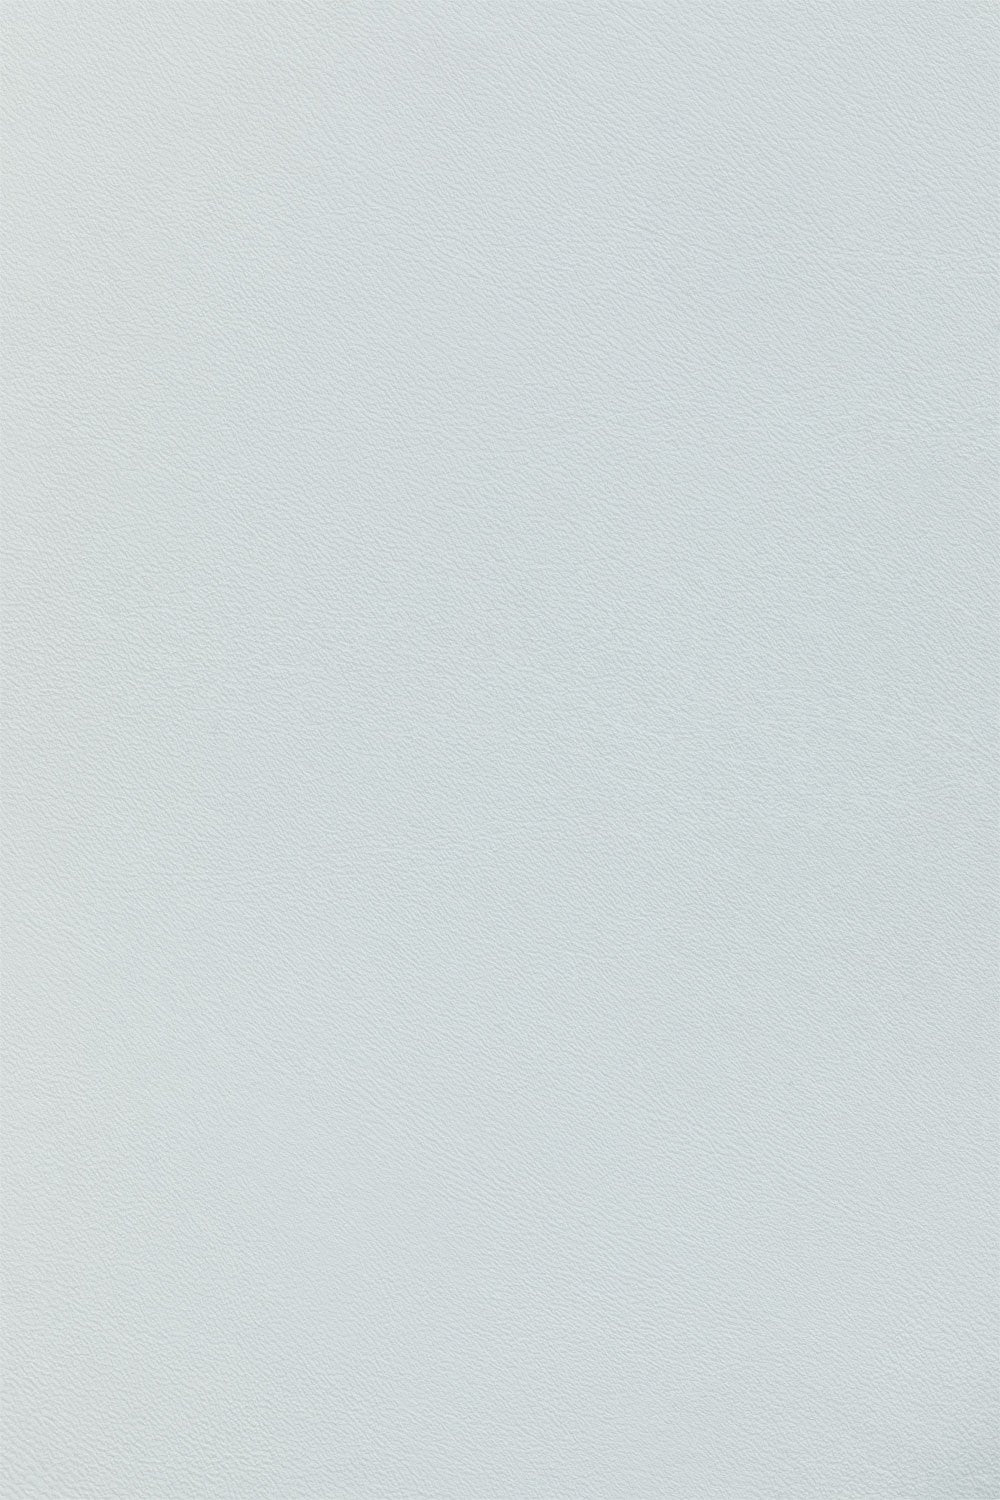 Taburete Alto en Polipiel (66,5 cm) Wilpier Verde Laurel -  SKLUM